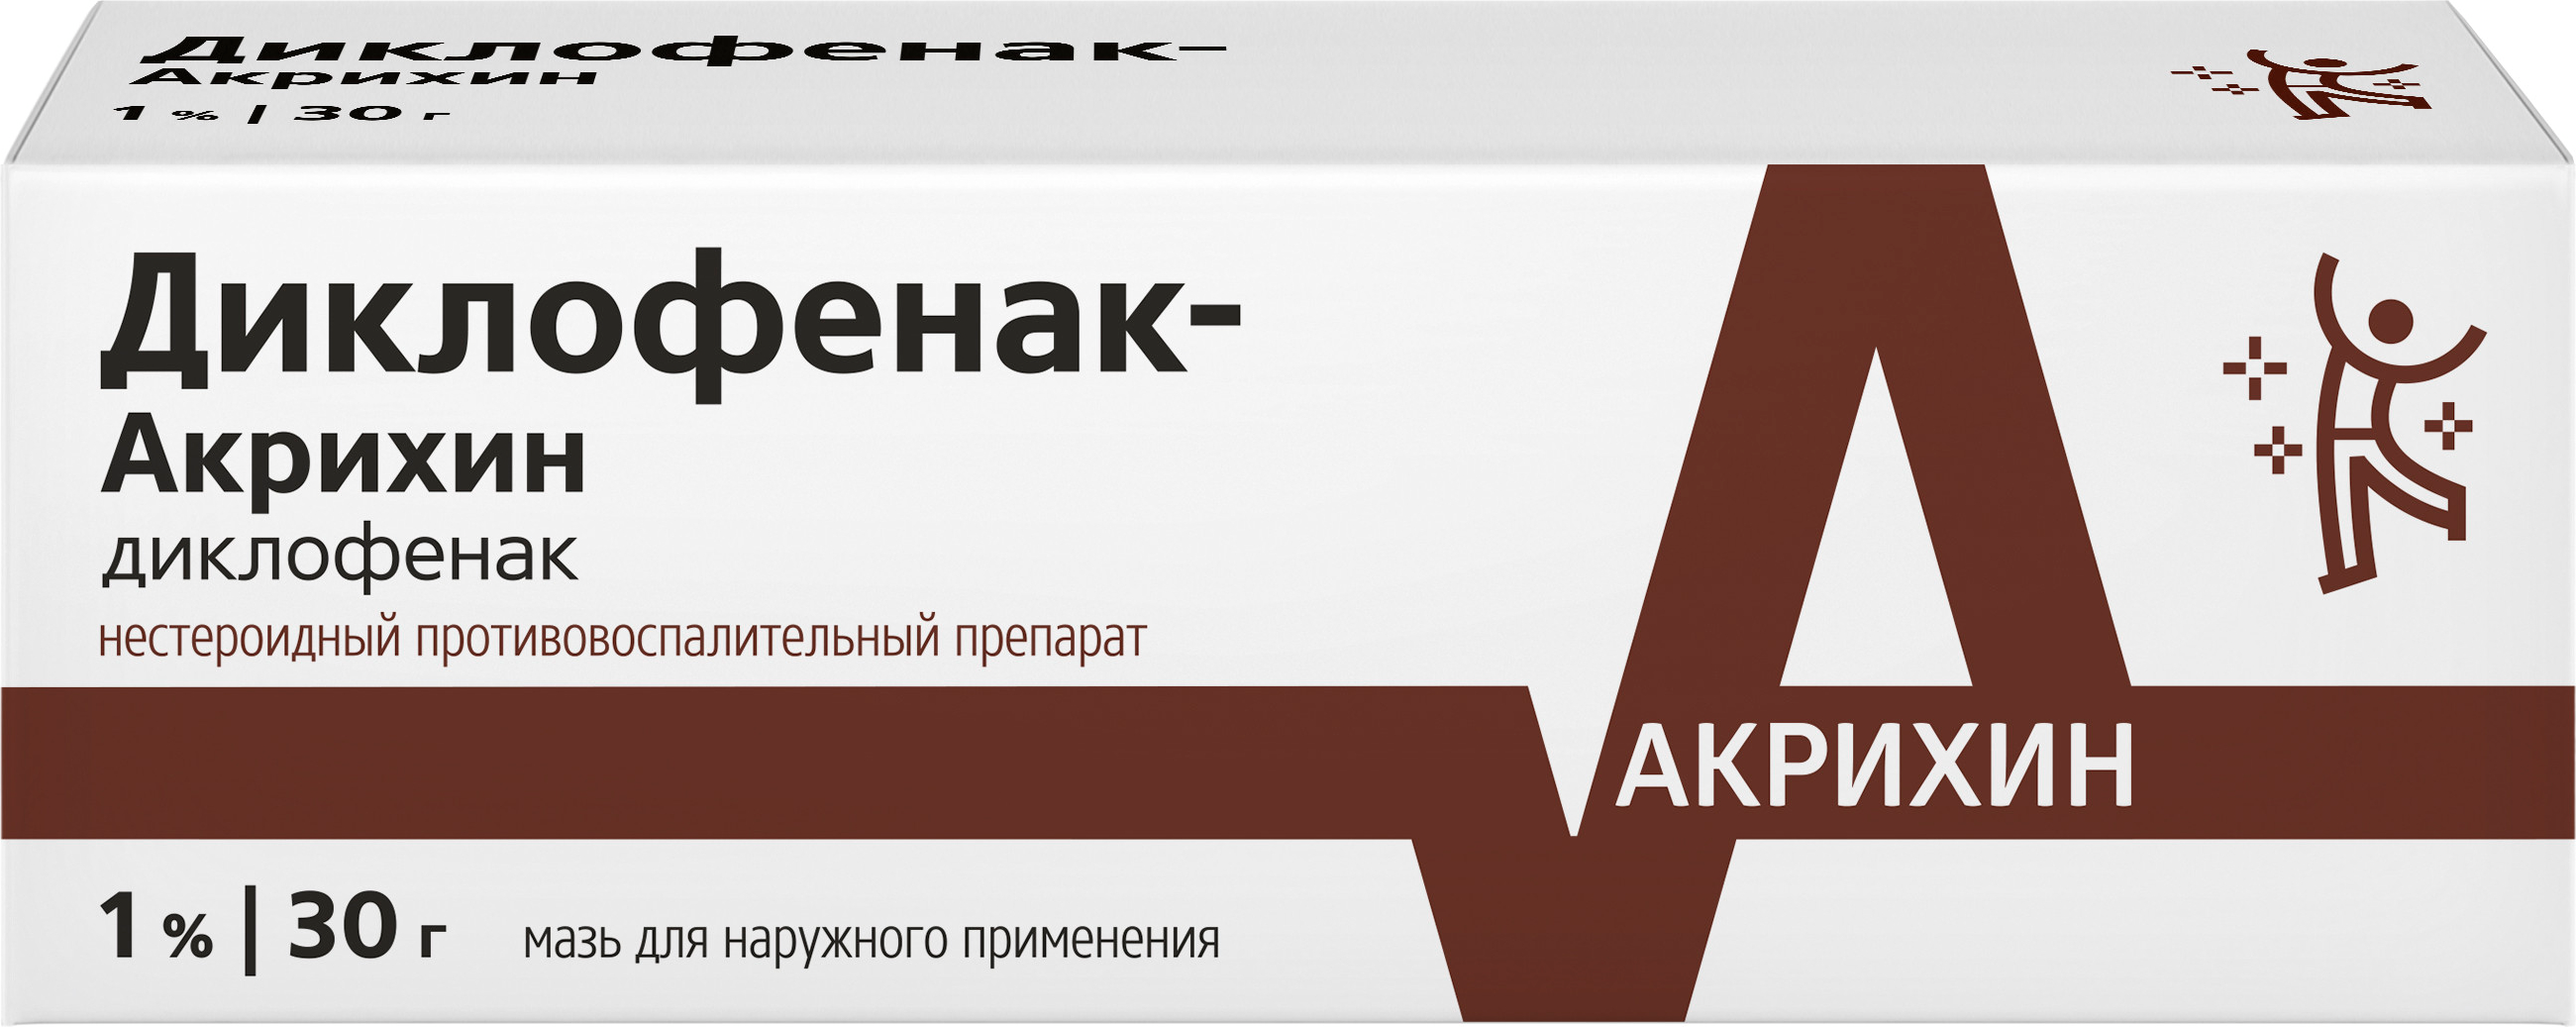 Диклофенак-Акрихин, мазь 1%, 30 г синафлан акрихин мазь 0 025% 10г